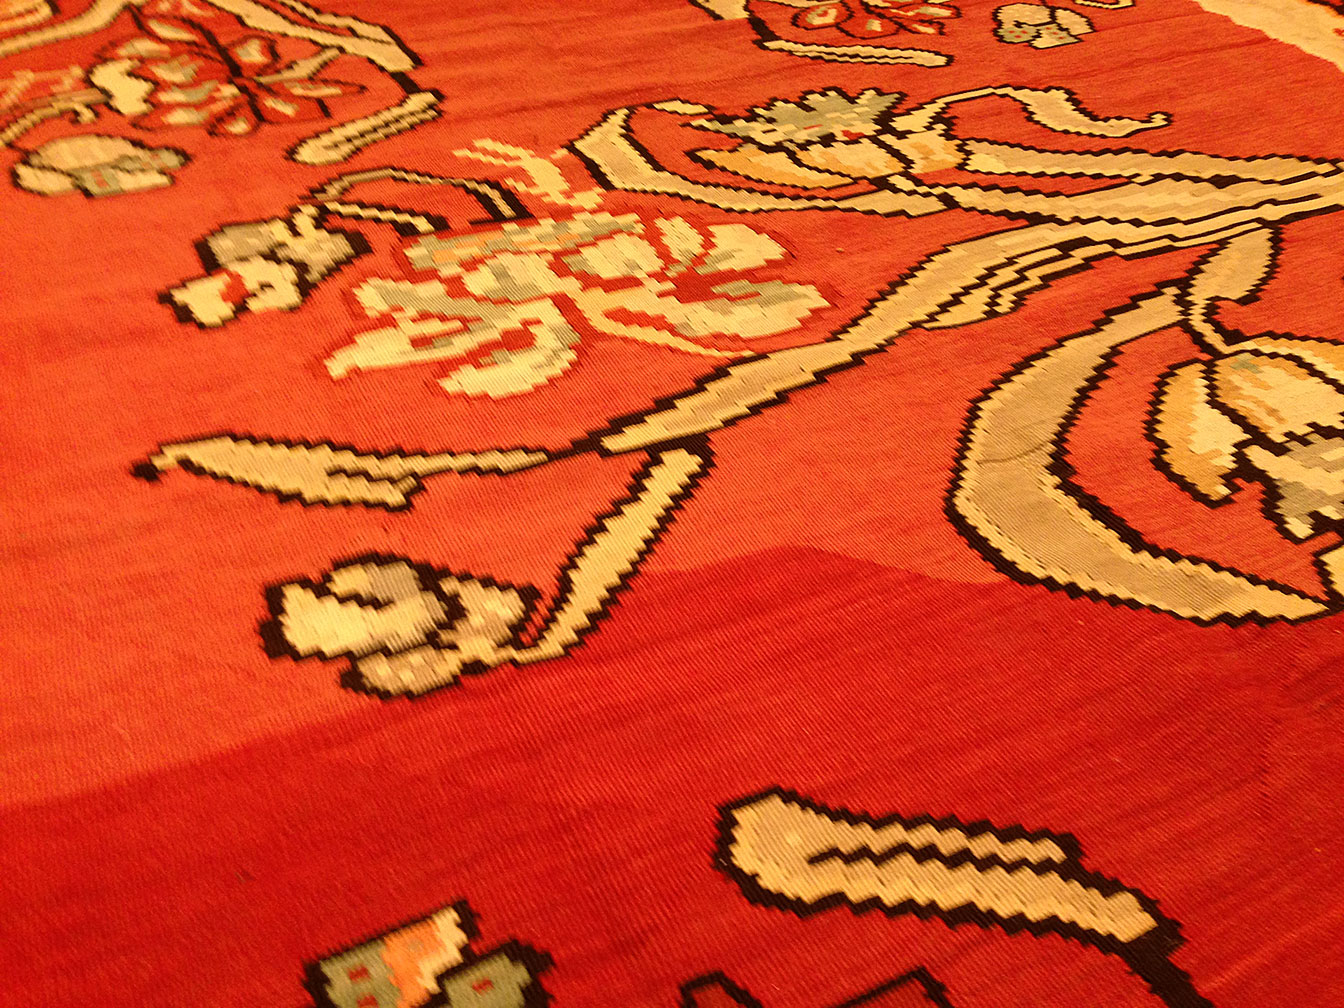 Vintage bessarabian Carpet - # 50071